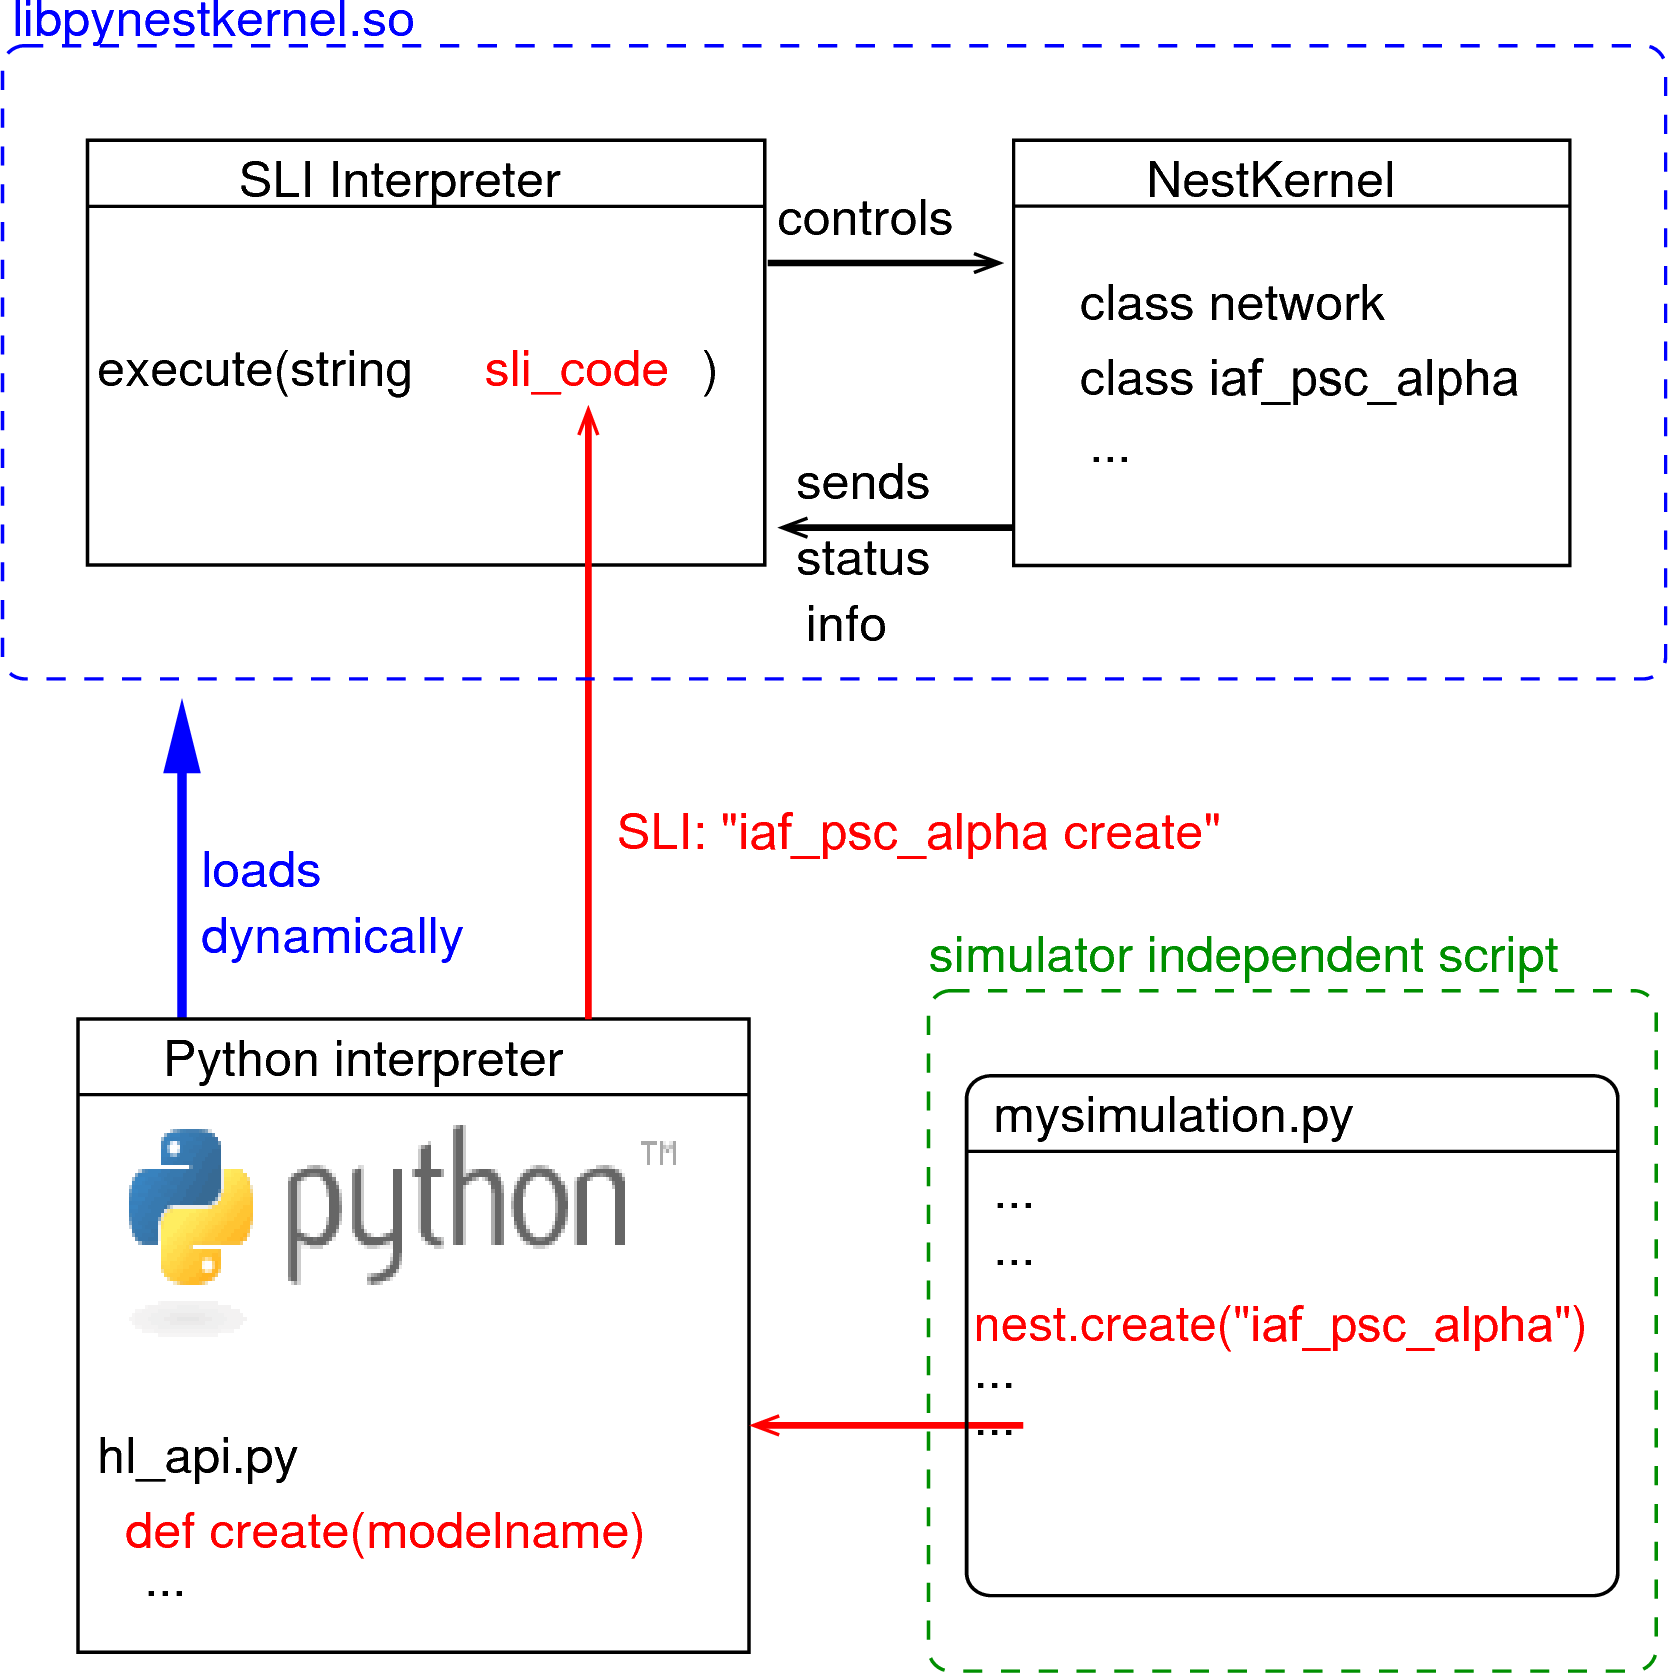 Python Interface